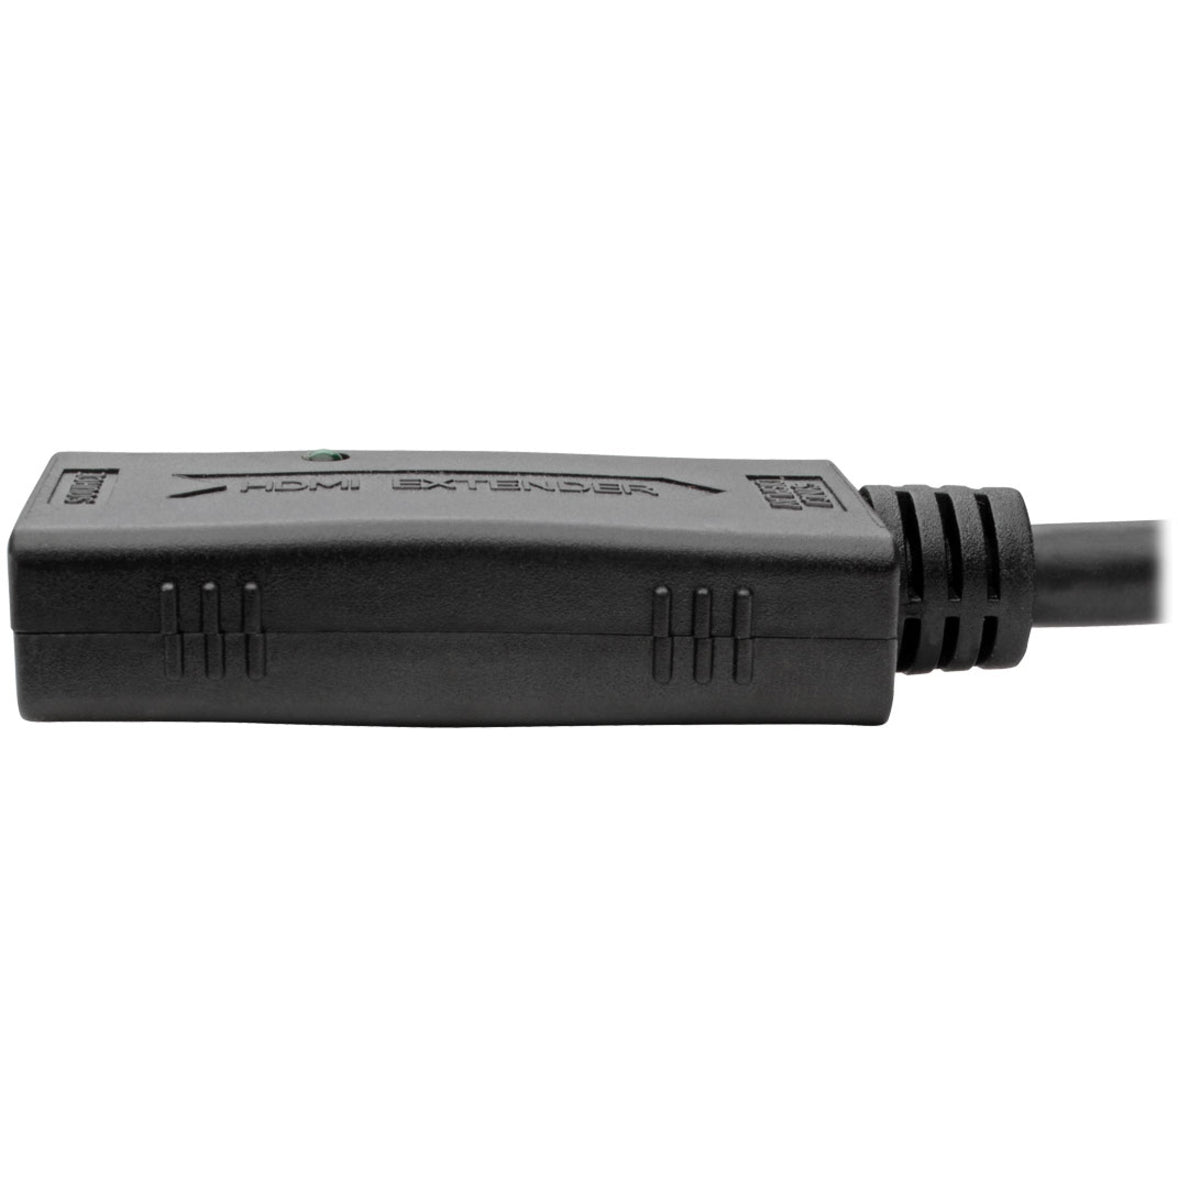 Tripp Lite B123-001 HDMI Active Extender Cable, 1ft, Copper Conductor, TAA Compliant, Taiwan Origin